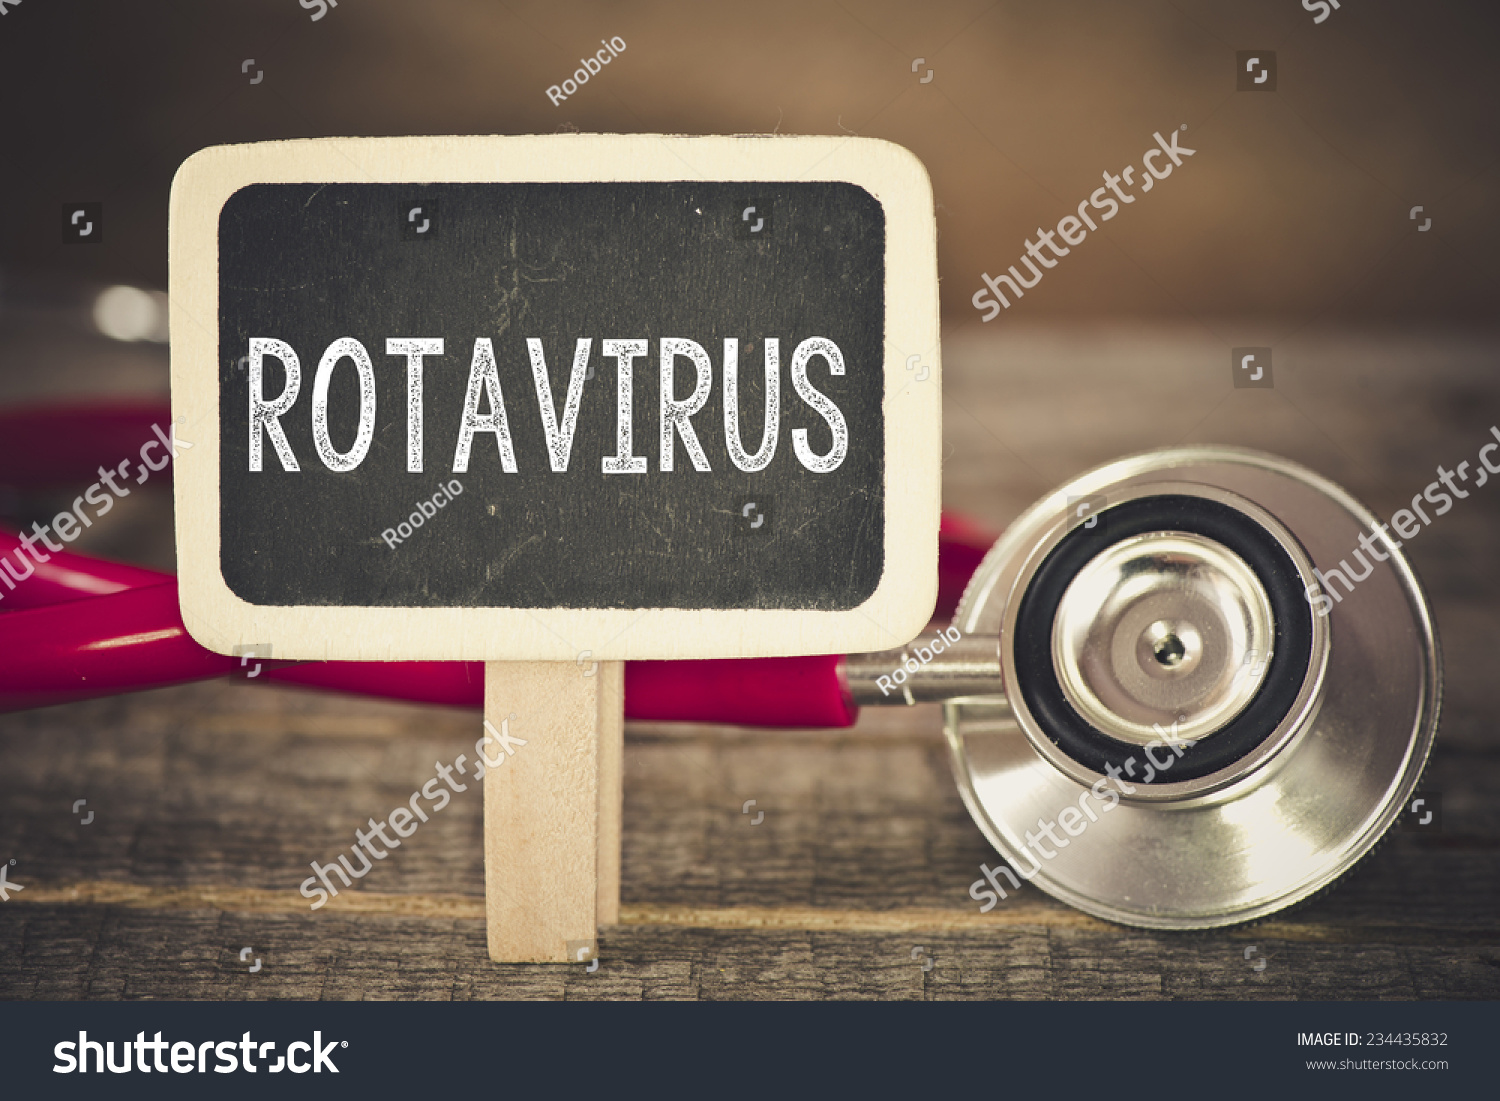 Rotavirus and stethoscope. Medecine concept. Blackboard with word rotavirus and stethoscope #234435832